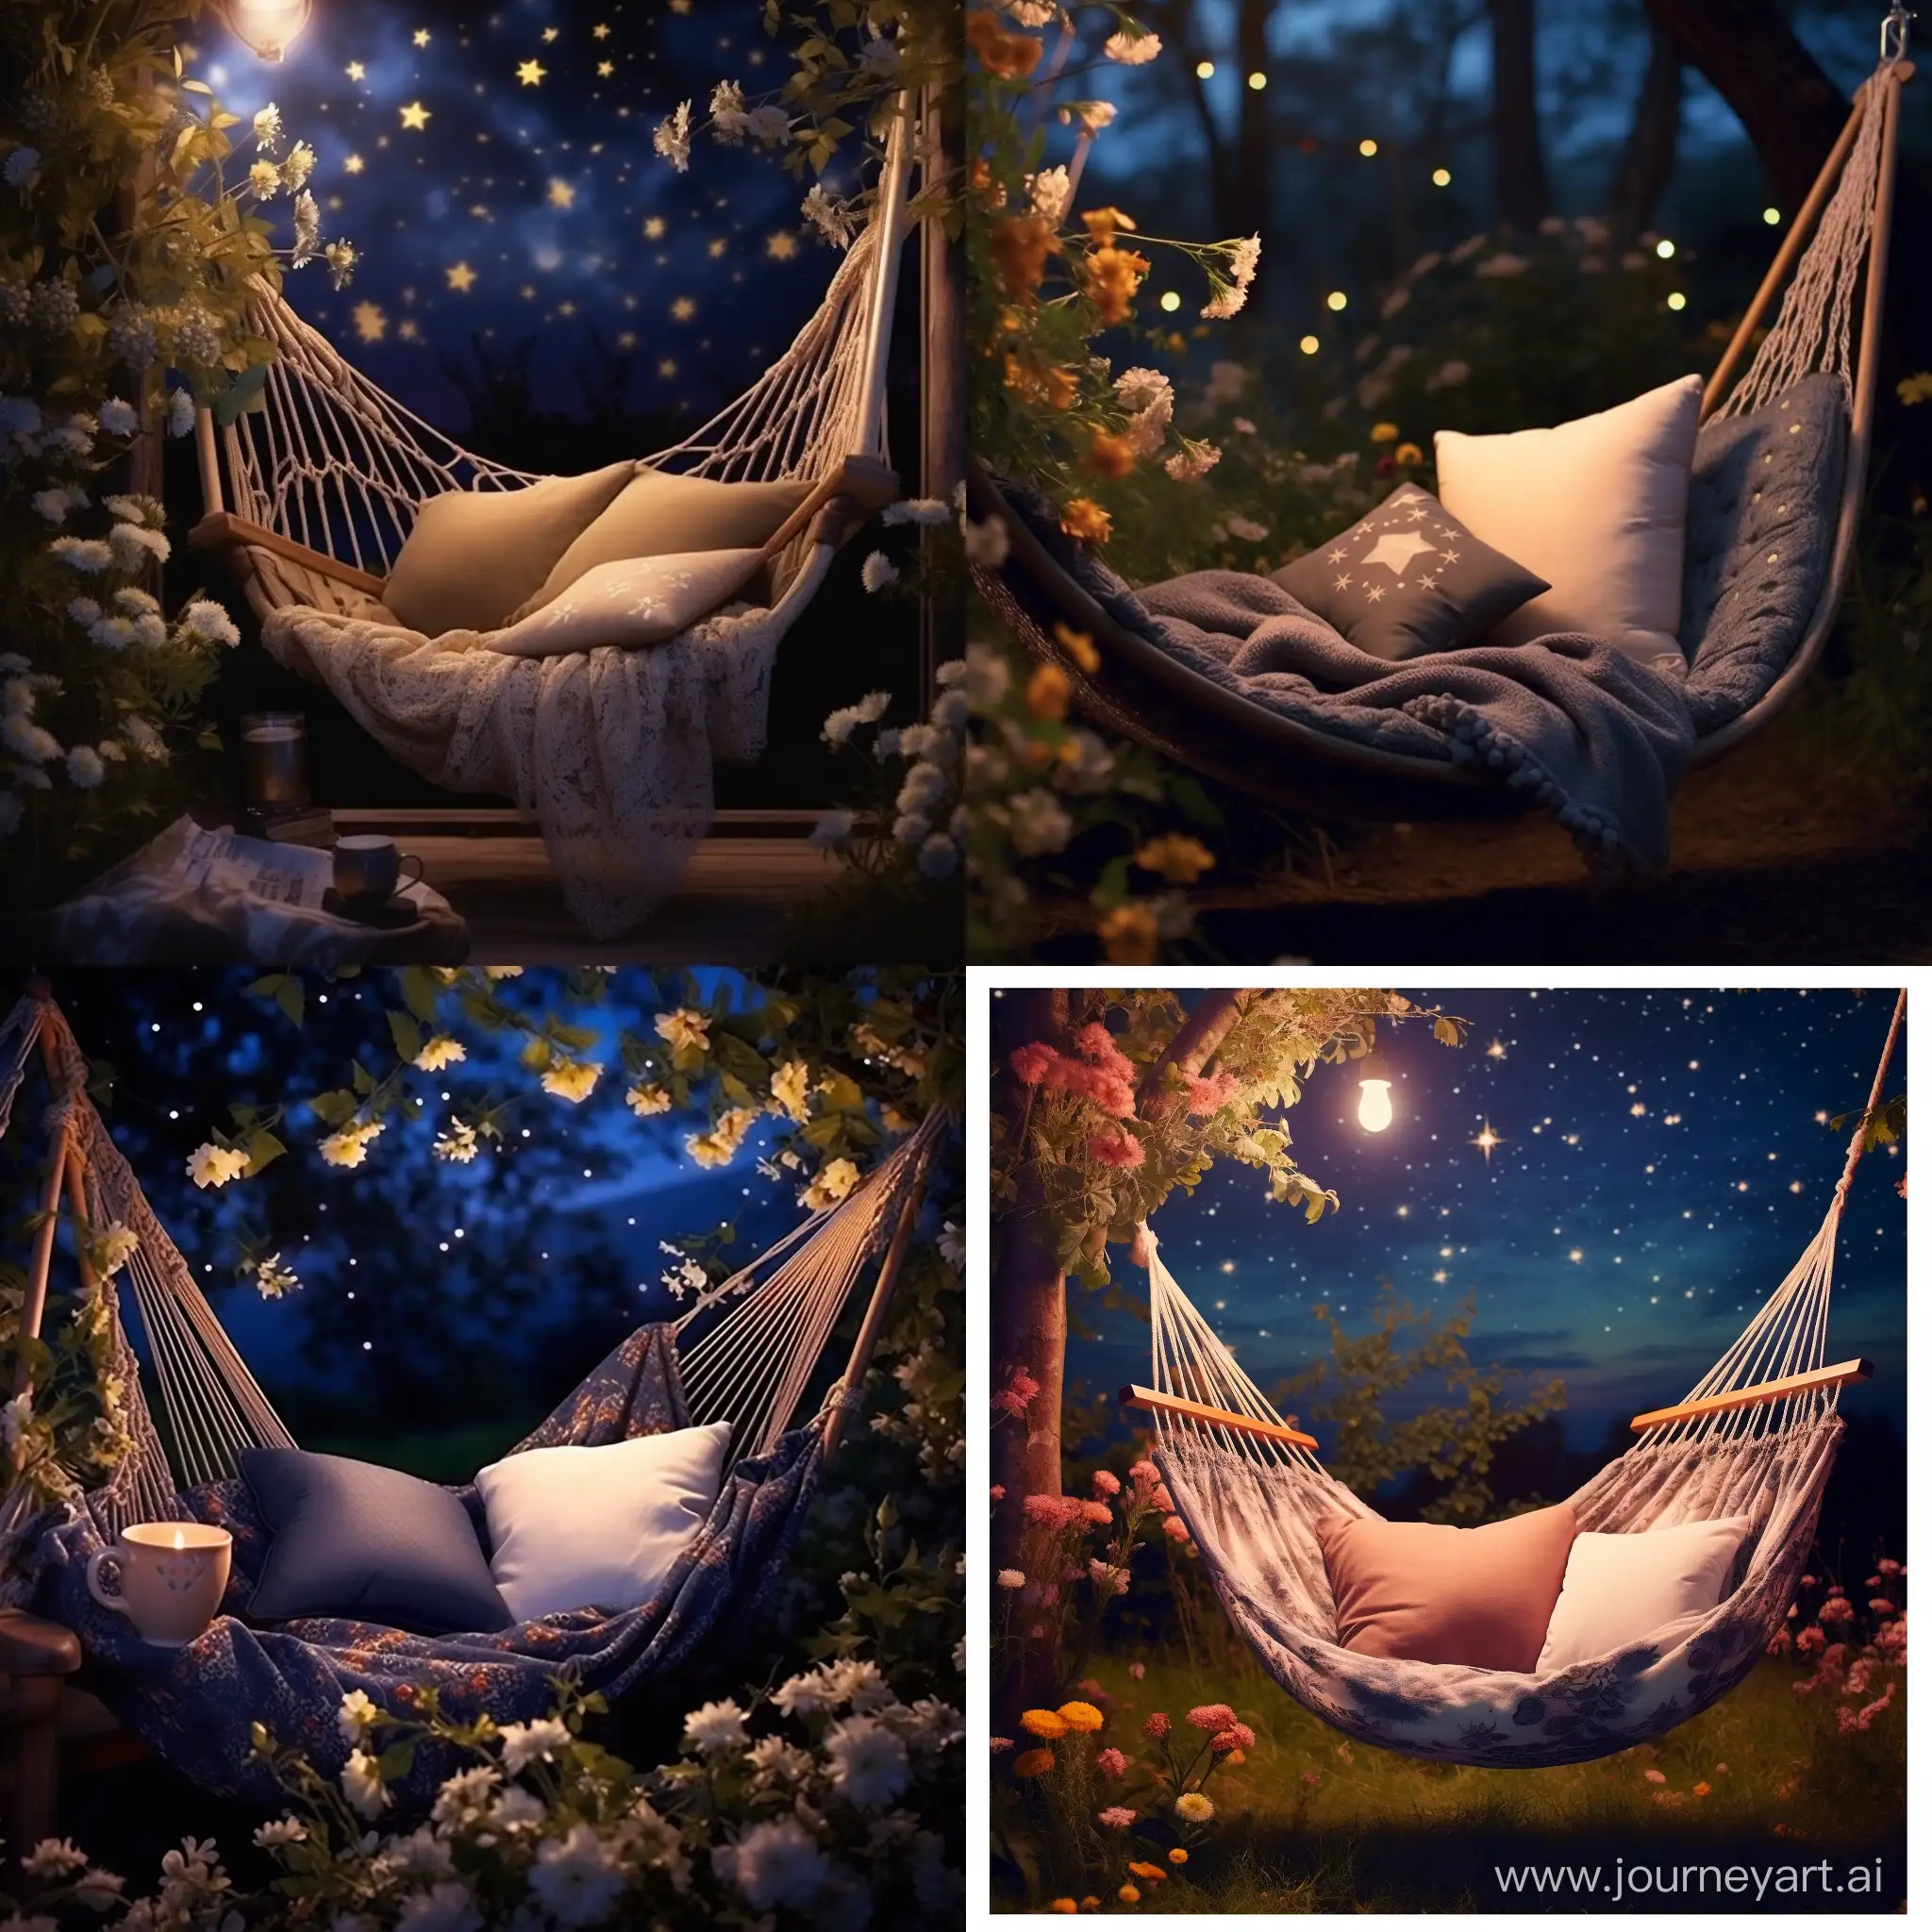 Nighttime-Serenity-Hammock-Resting-in-a-Blossoming-Garden-under-Crescent-Moon